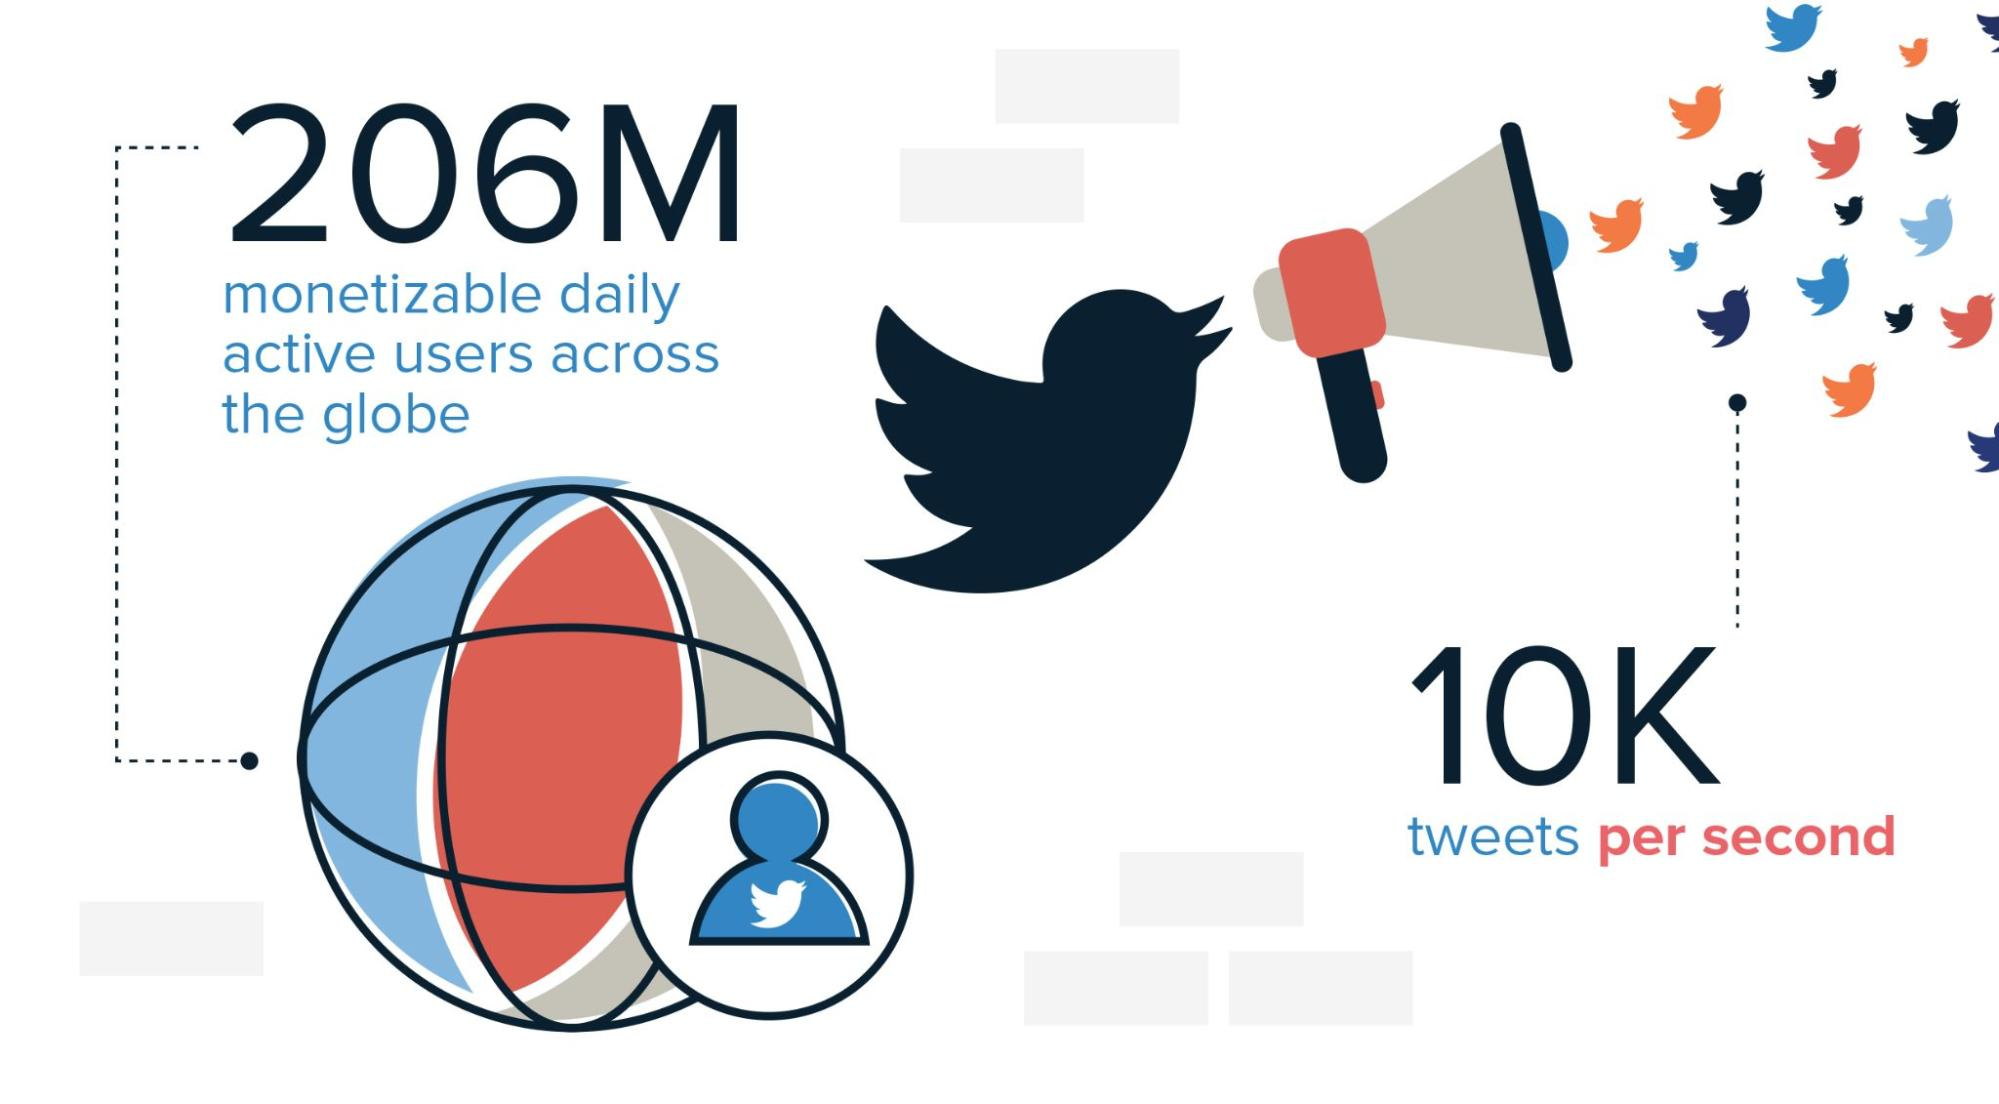 Twitter usage statistics